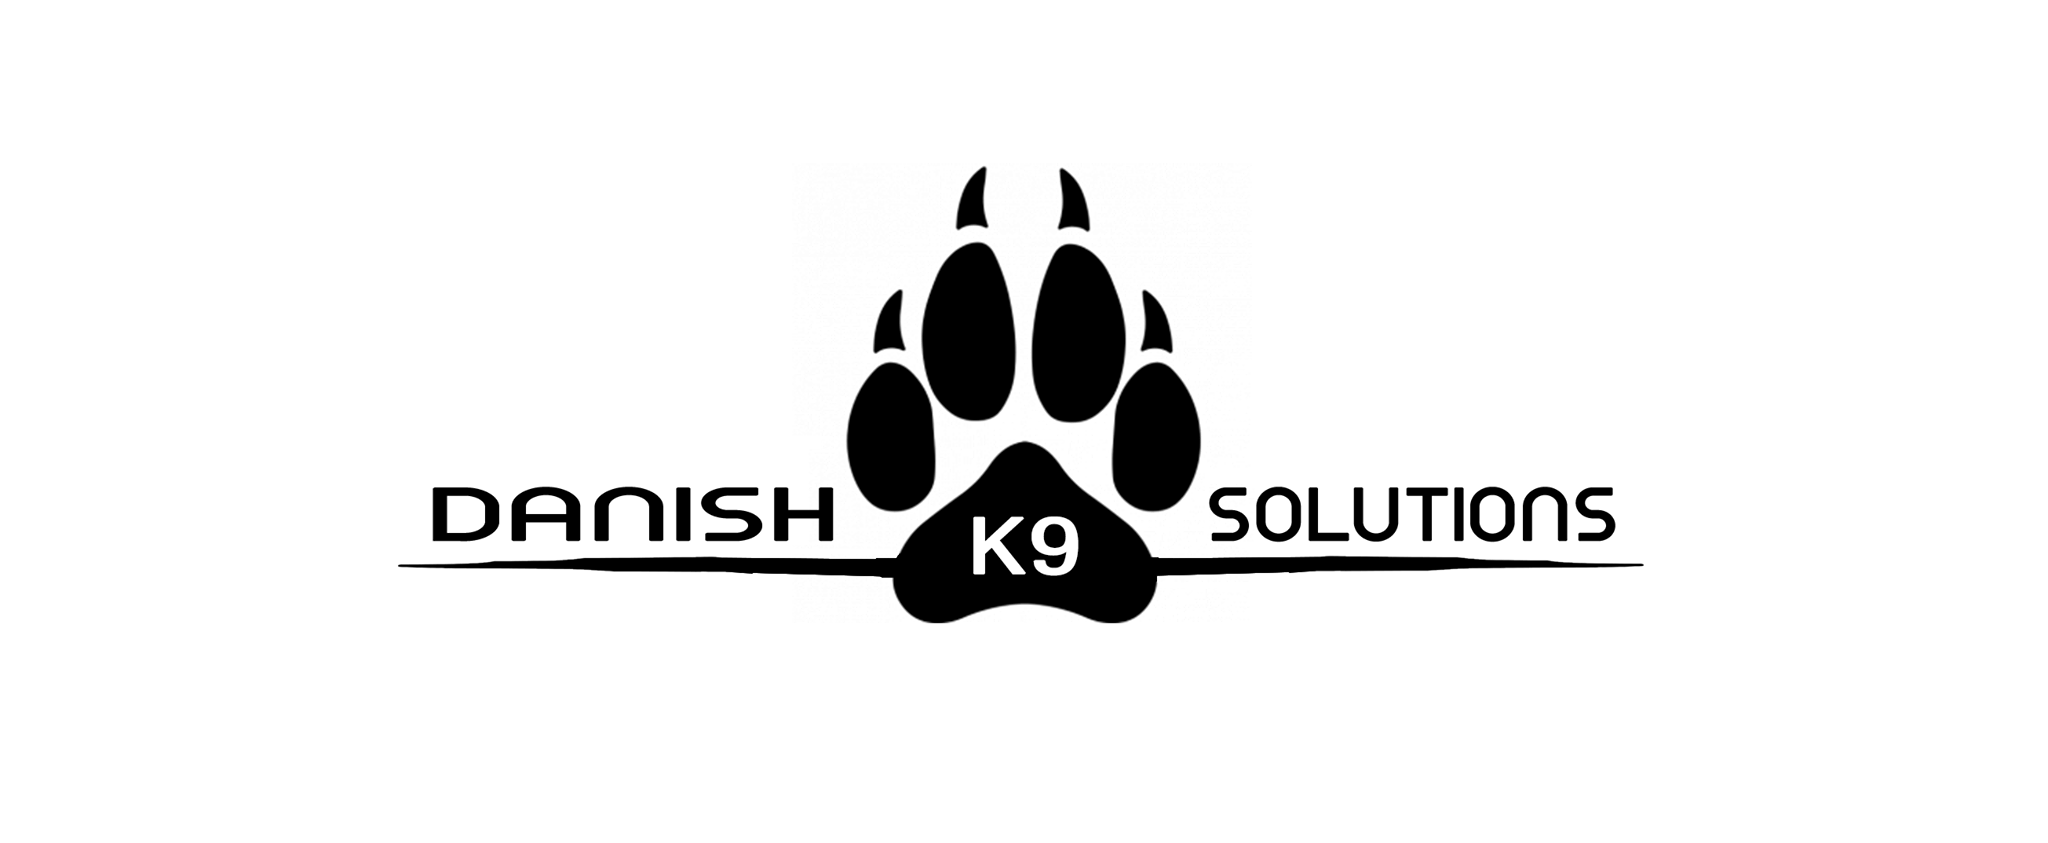 Danish K9 Solutions